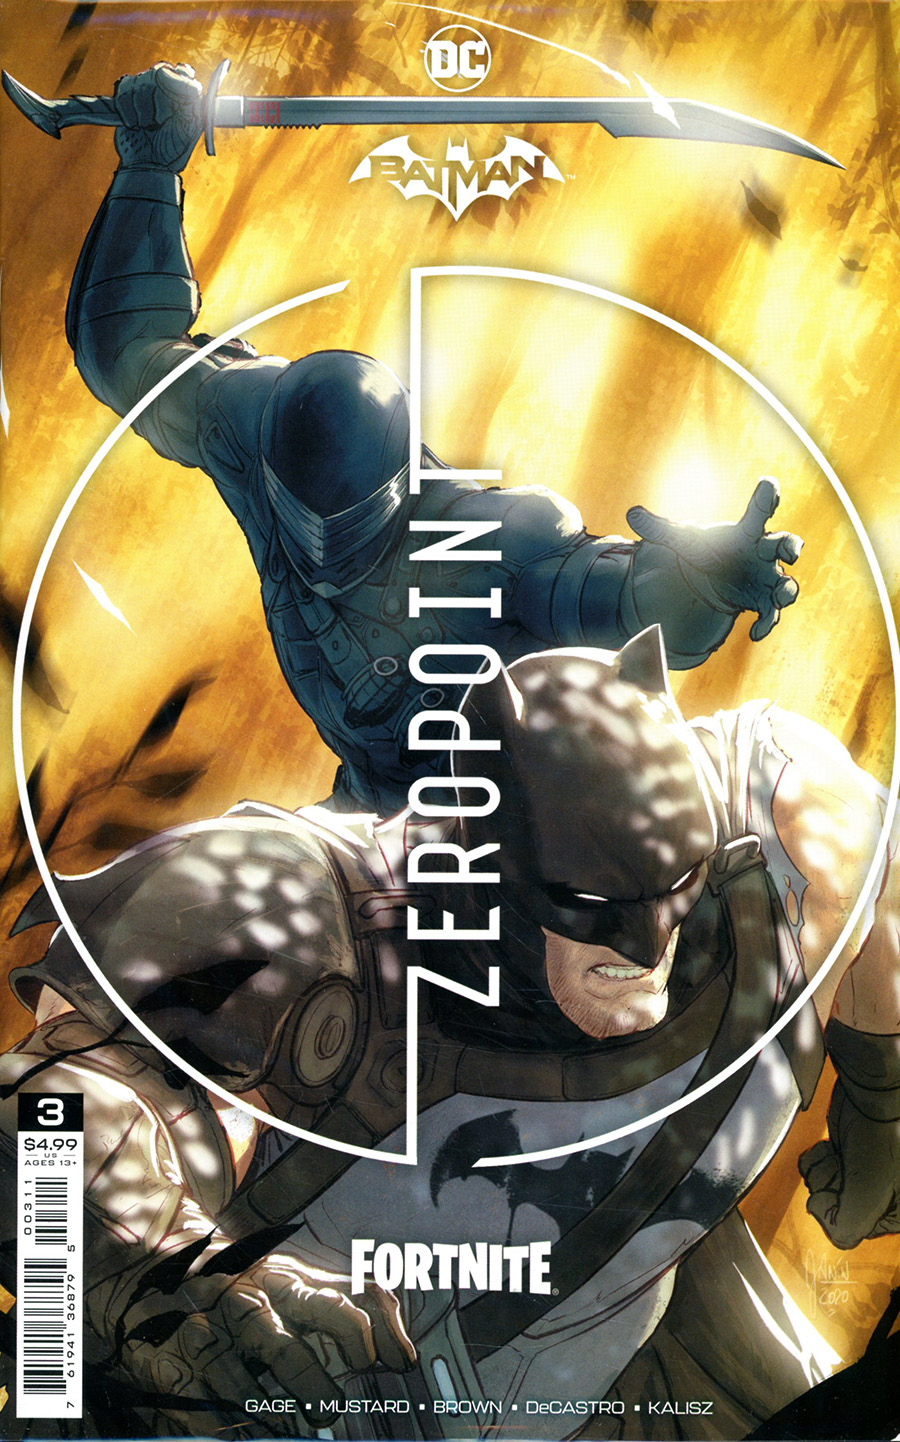 Batman Fortnite Zero Point #3 Cover A Regular Mikel Janin Cover